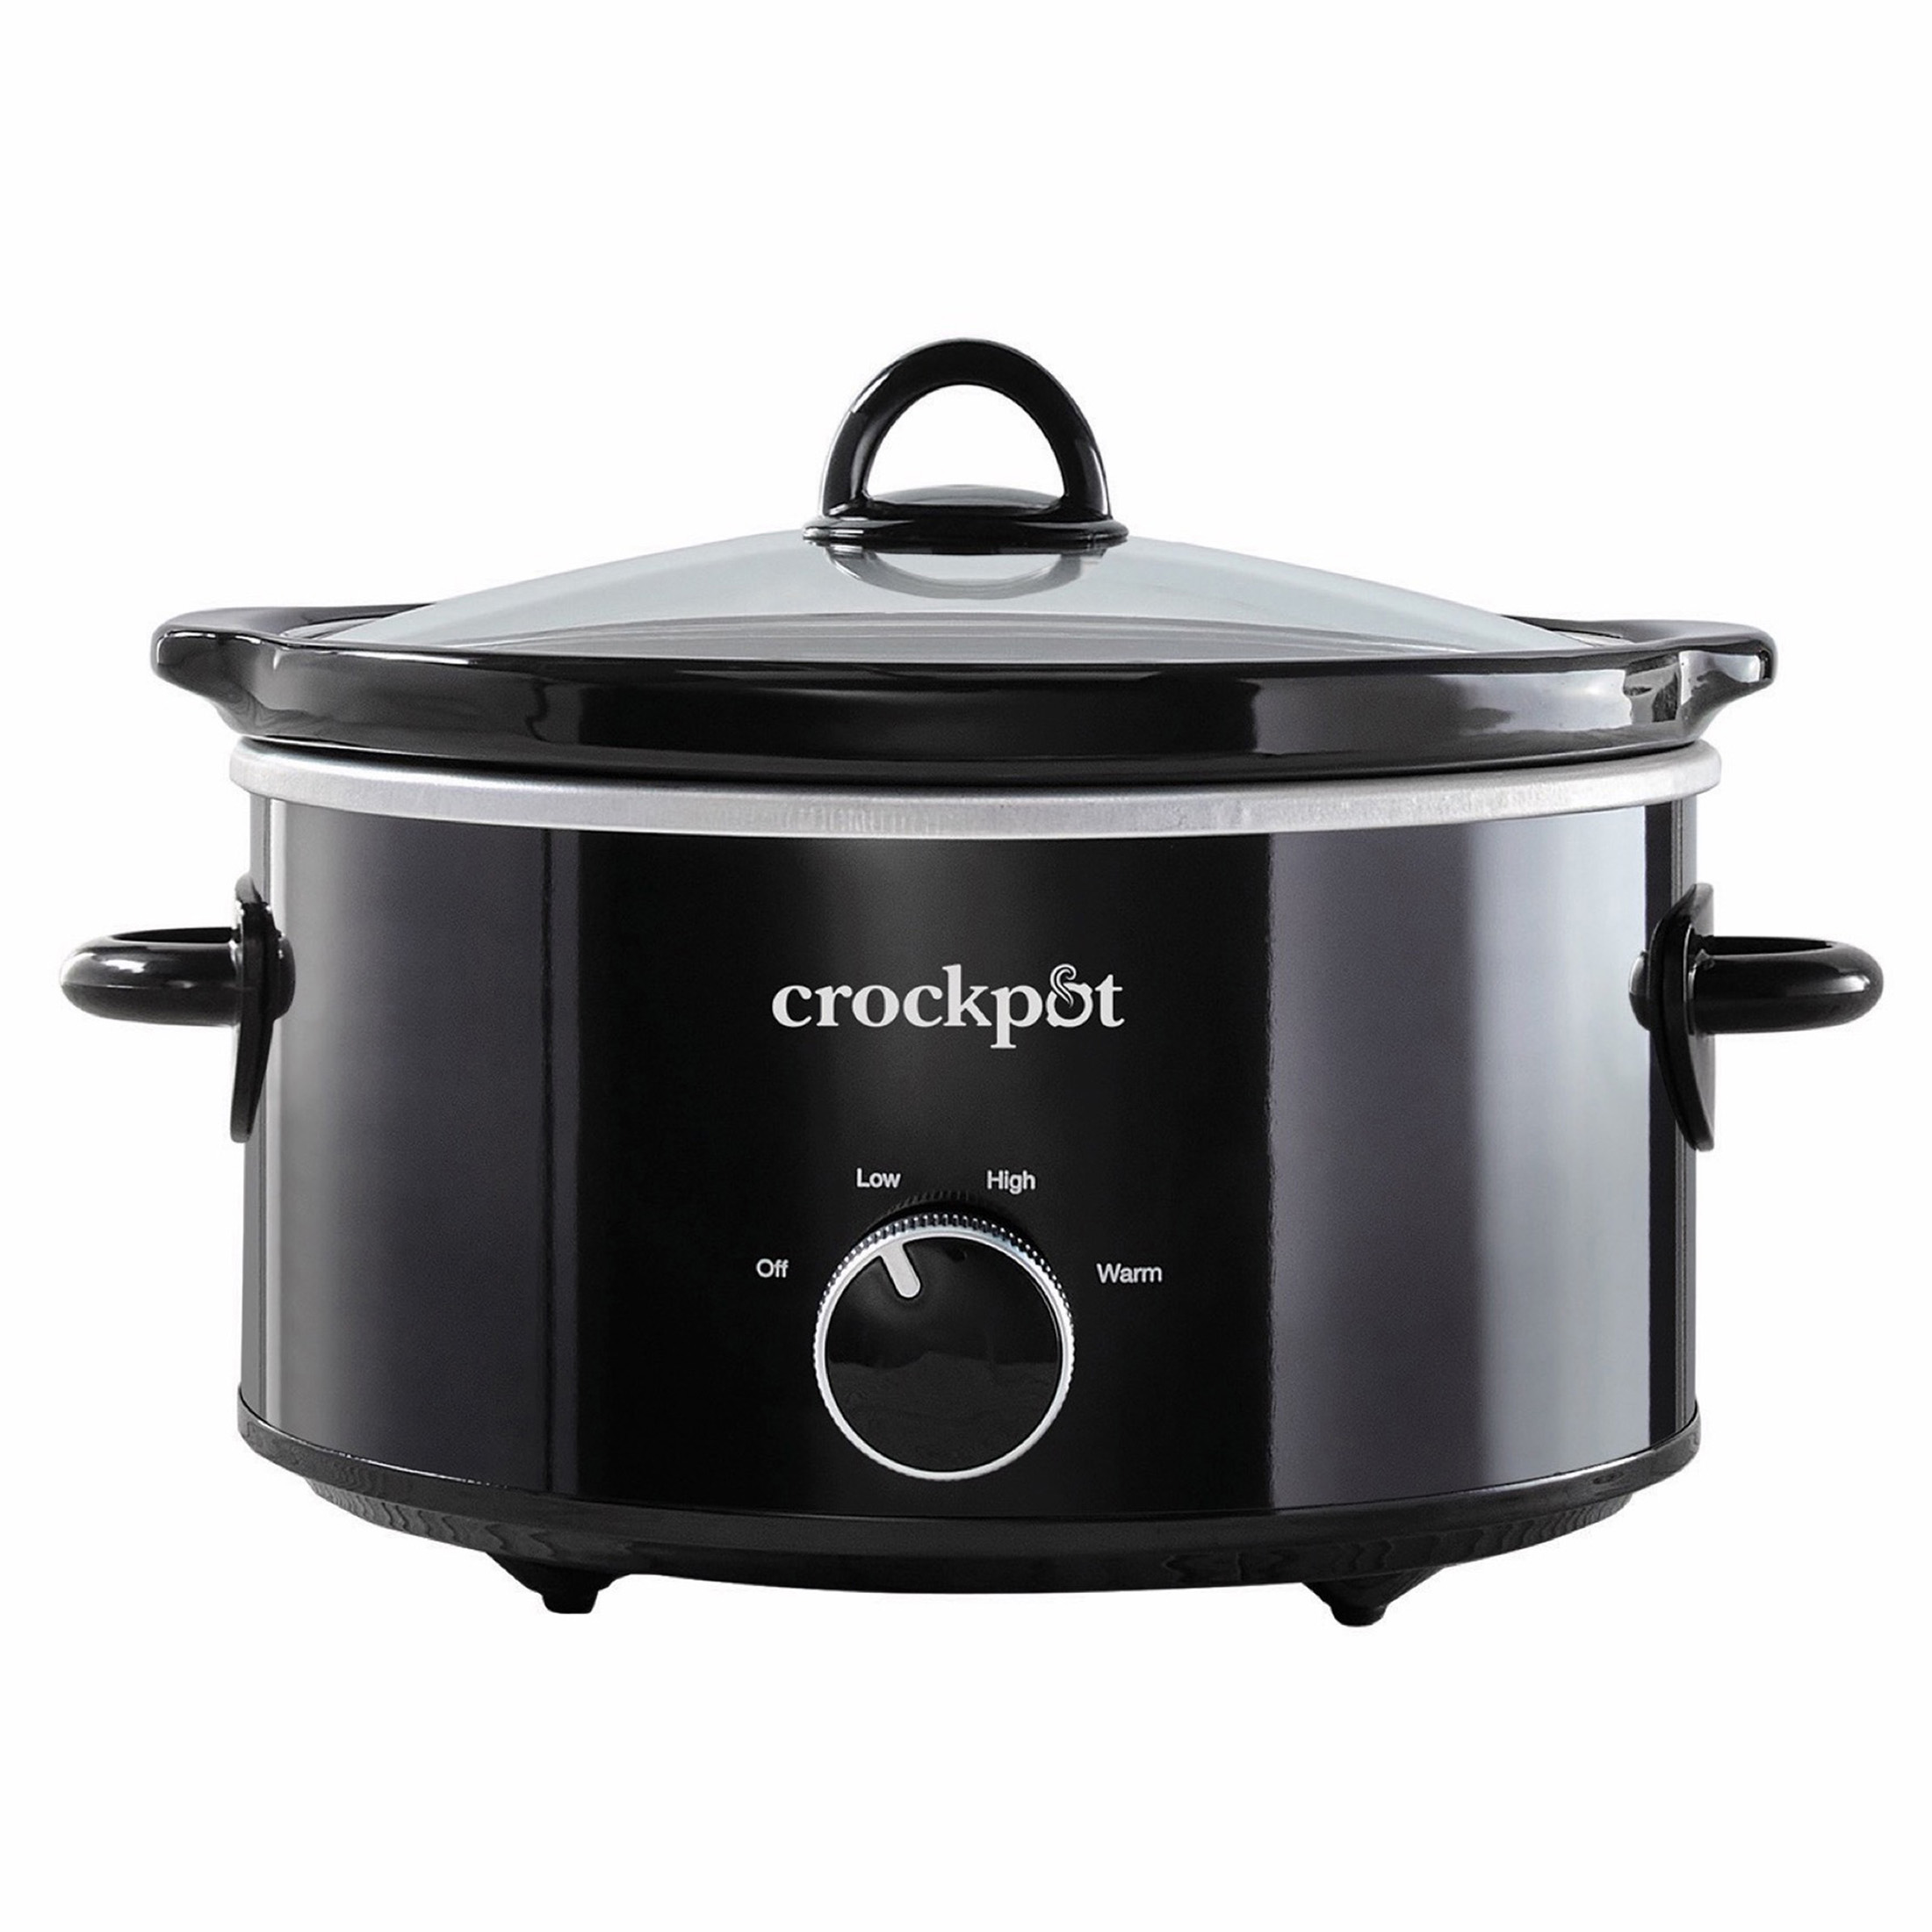 Crock-Pot 4-Quart Classic Slow Cooker, Black - image 1 of 8